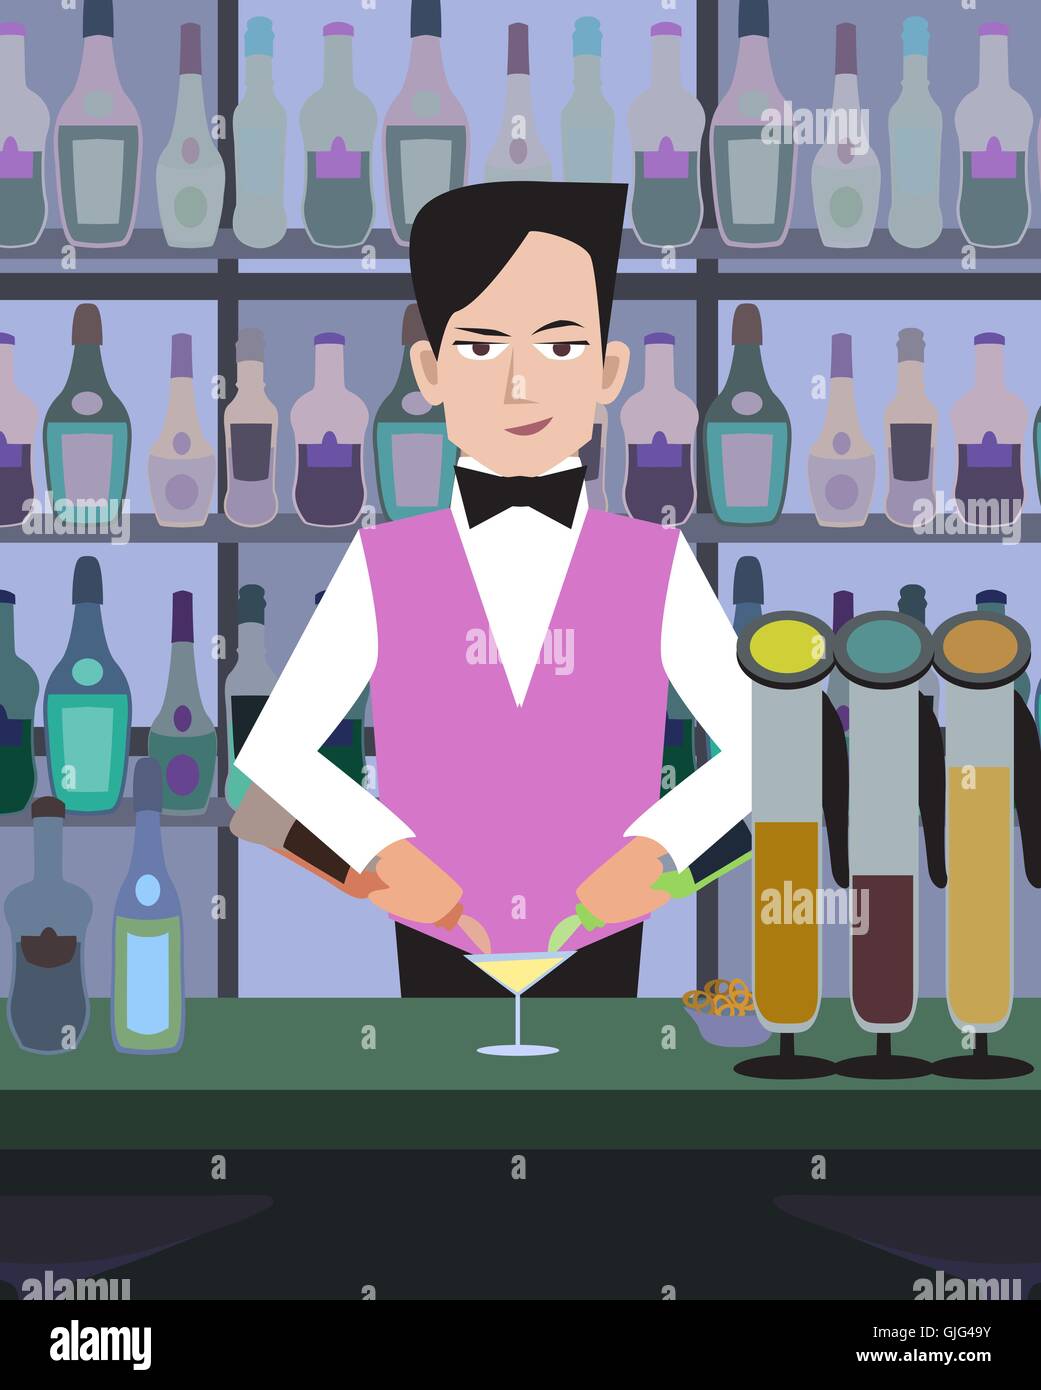 barman serves drinks at bar - cartoon colorful illustration Stock Vector